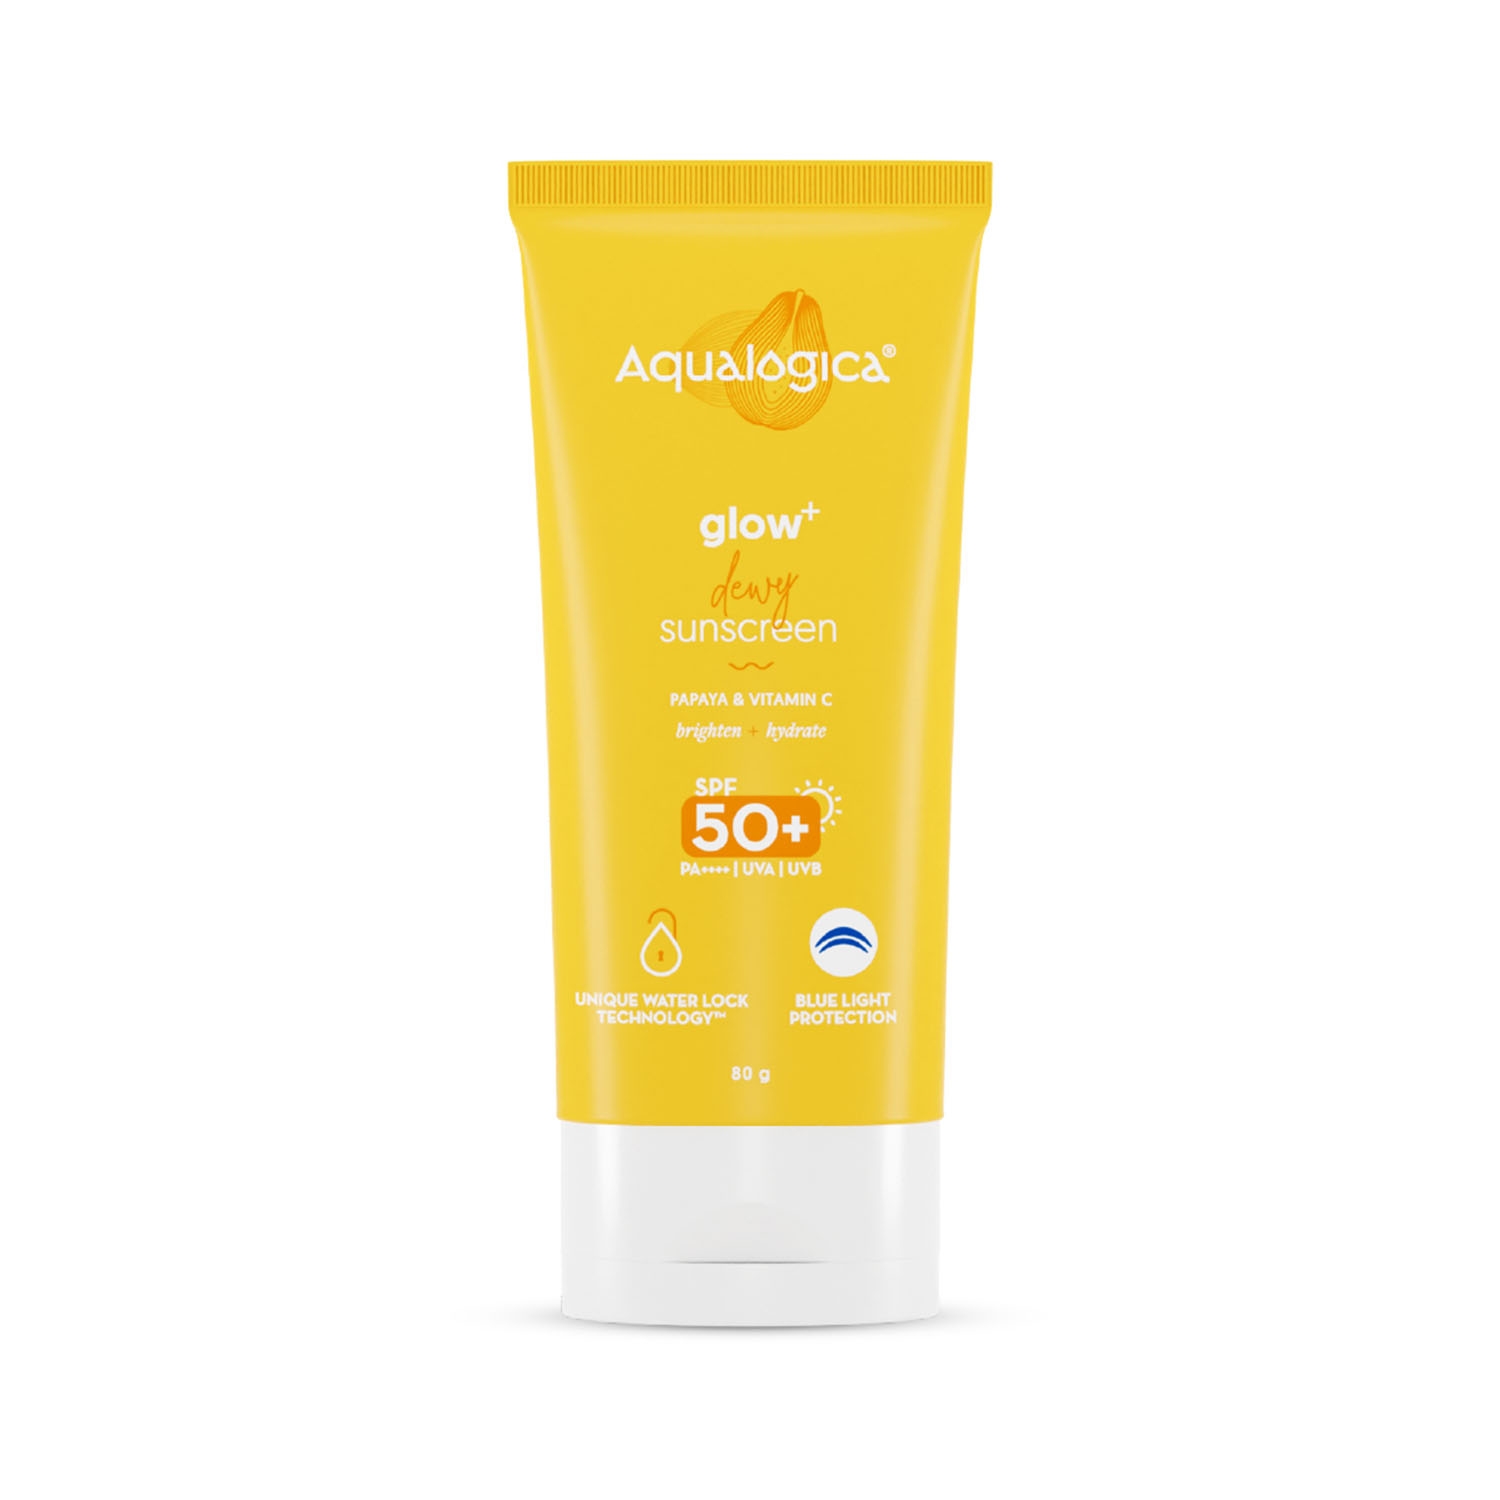 Aqualogica | Aqualogica Glow + Dewy Sunscreen With Papaya & Vitamin C SPF 50+ PA++ (80g)